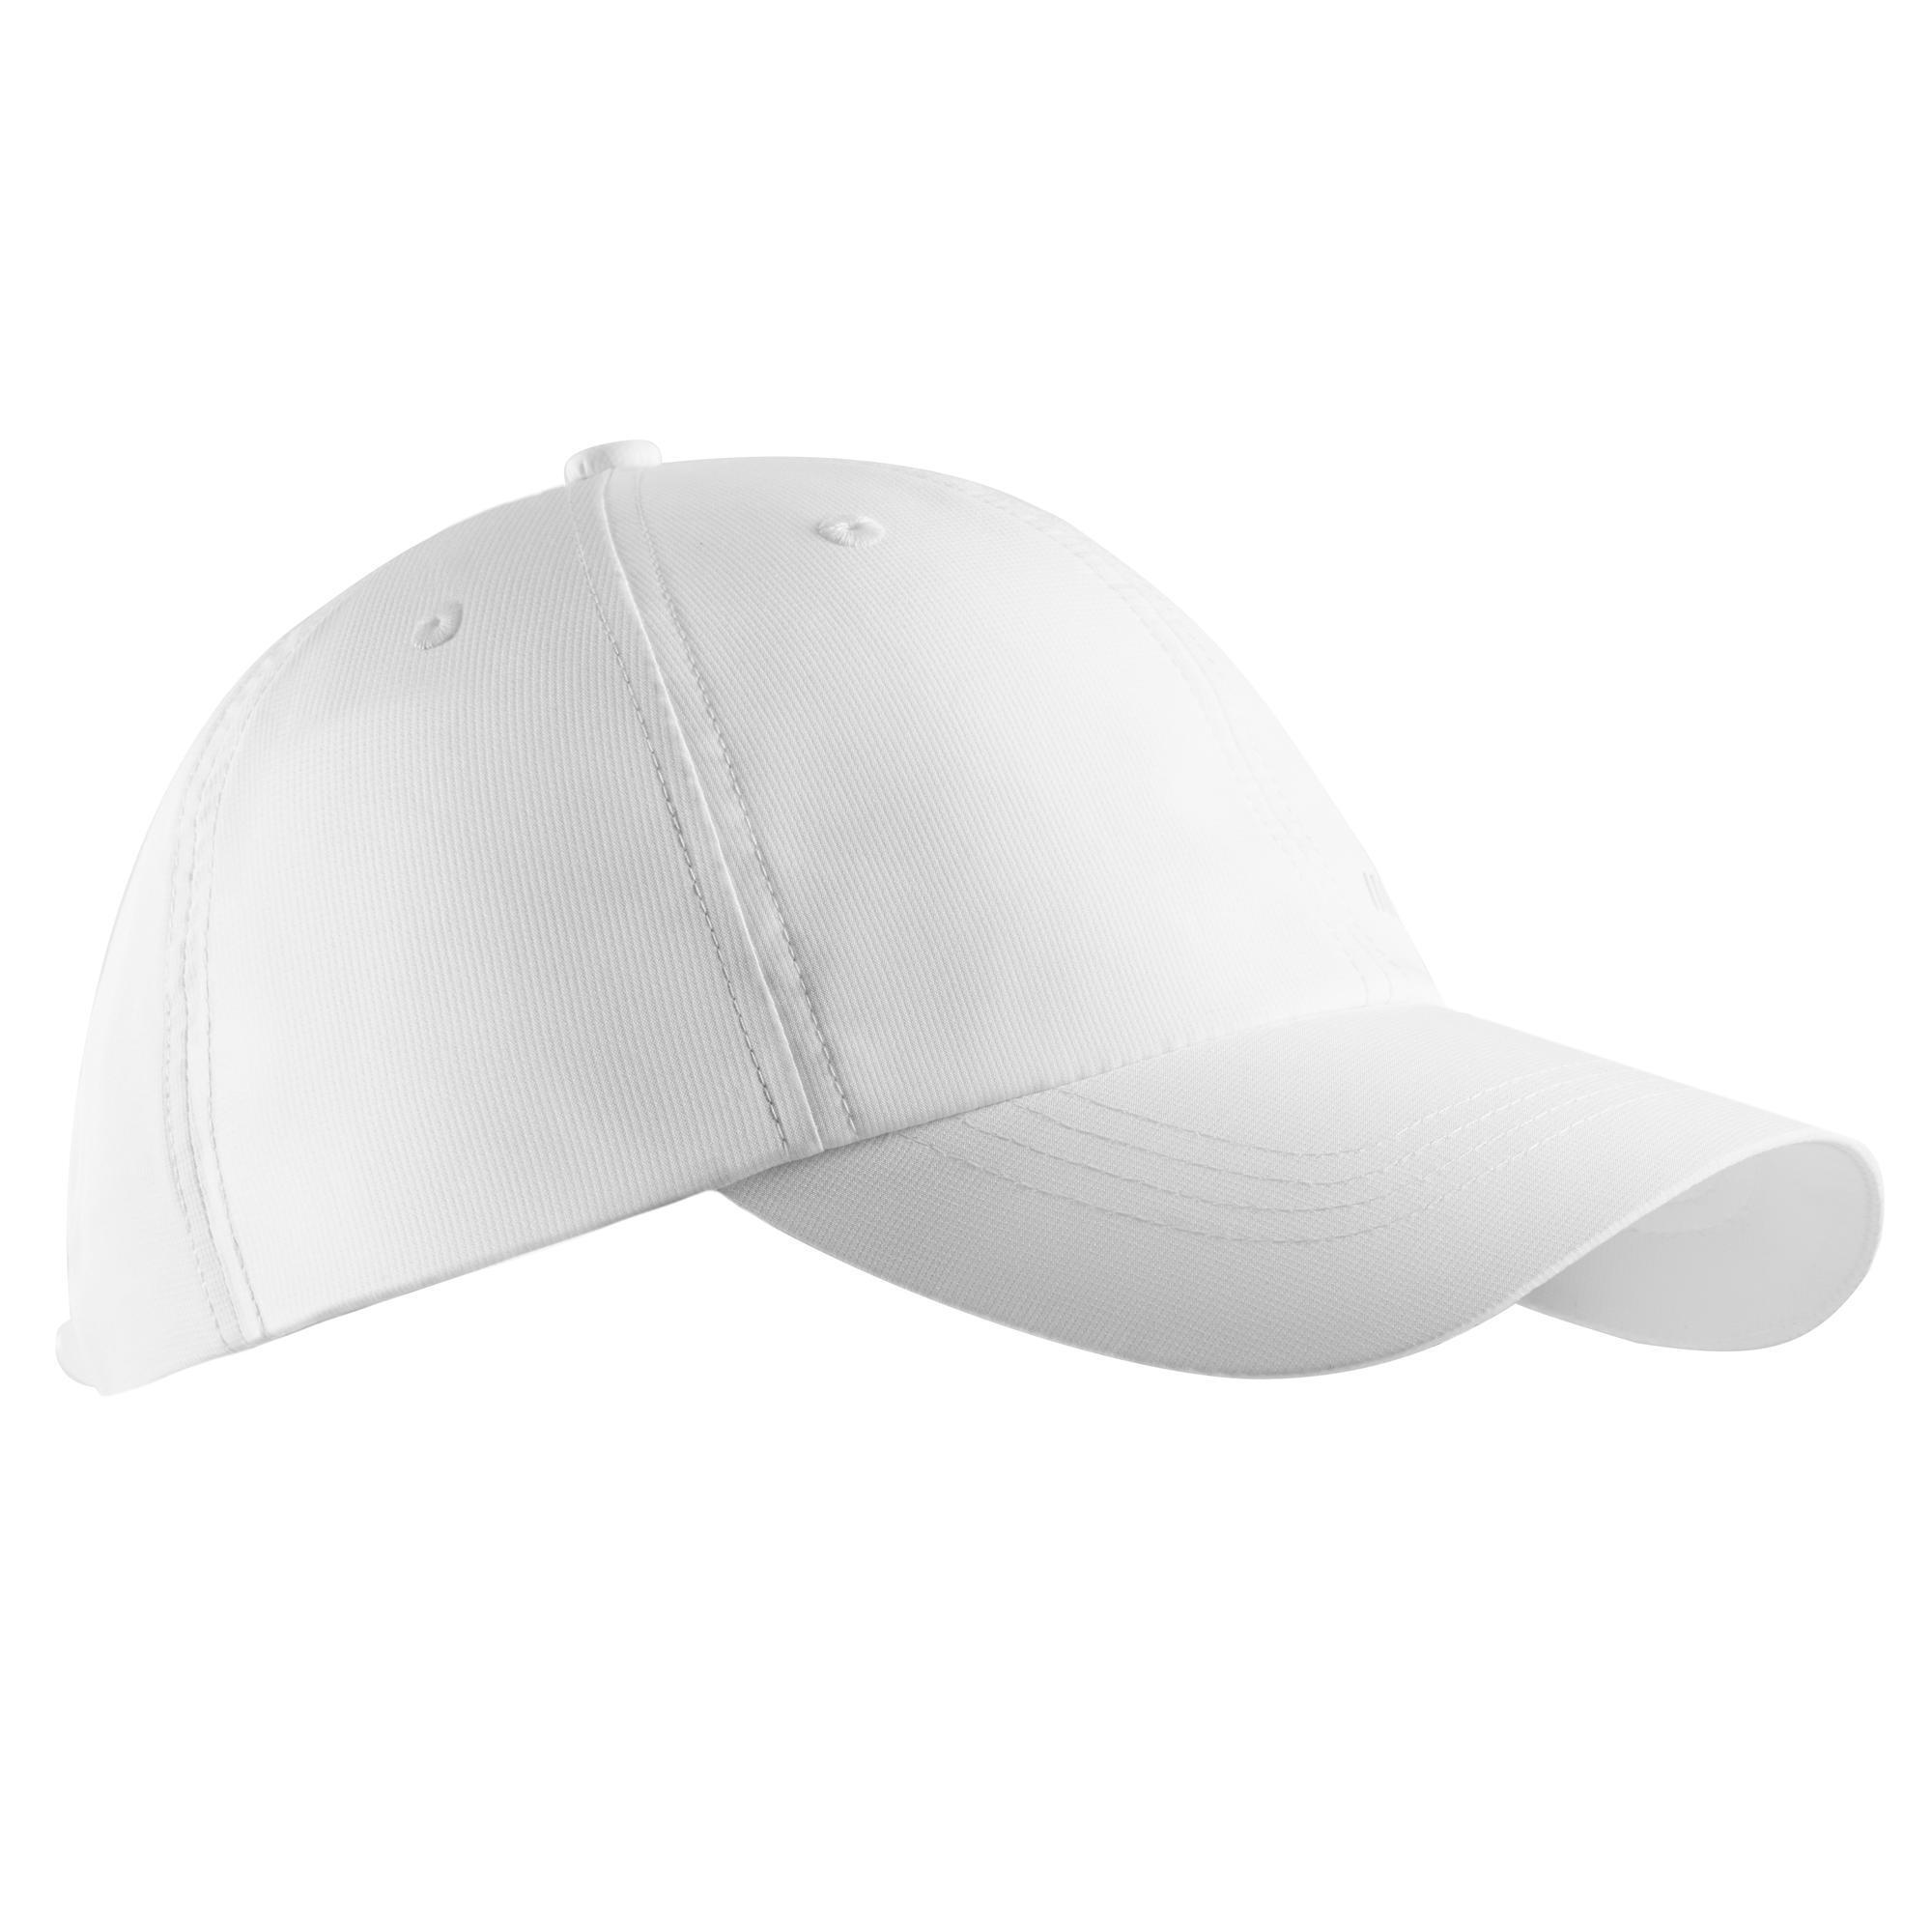 Adult's golf cap - WW 500 white 1/4